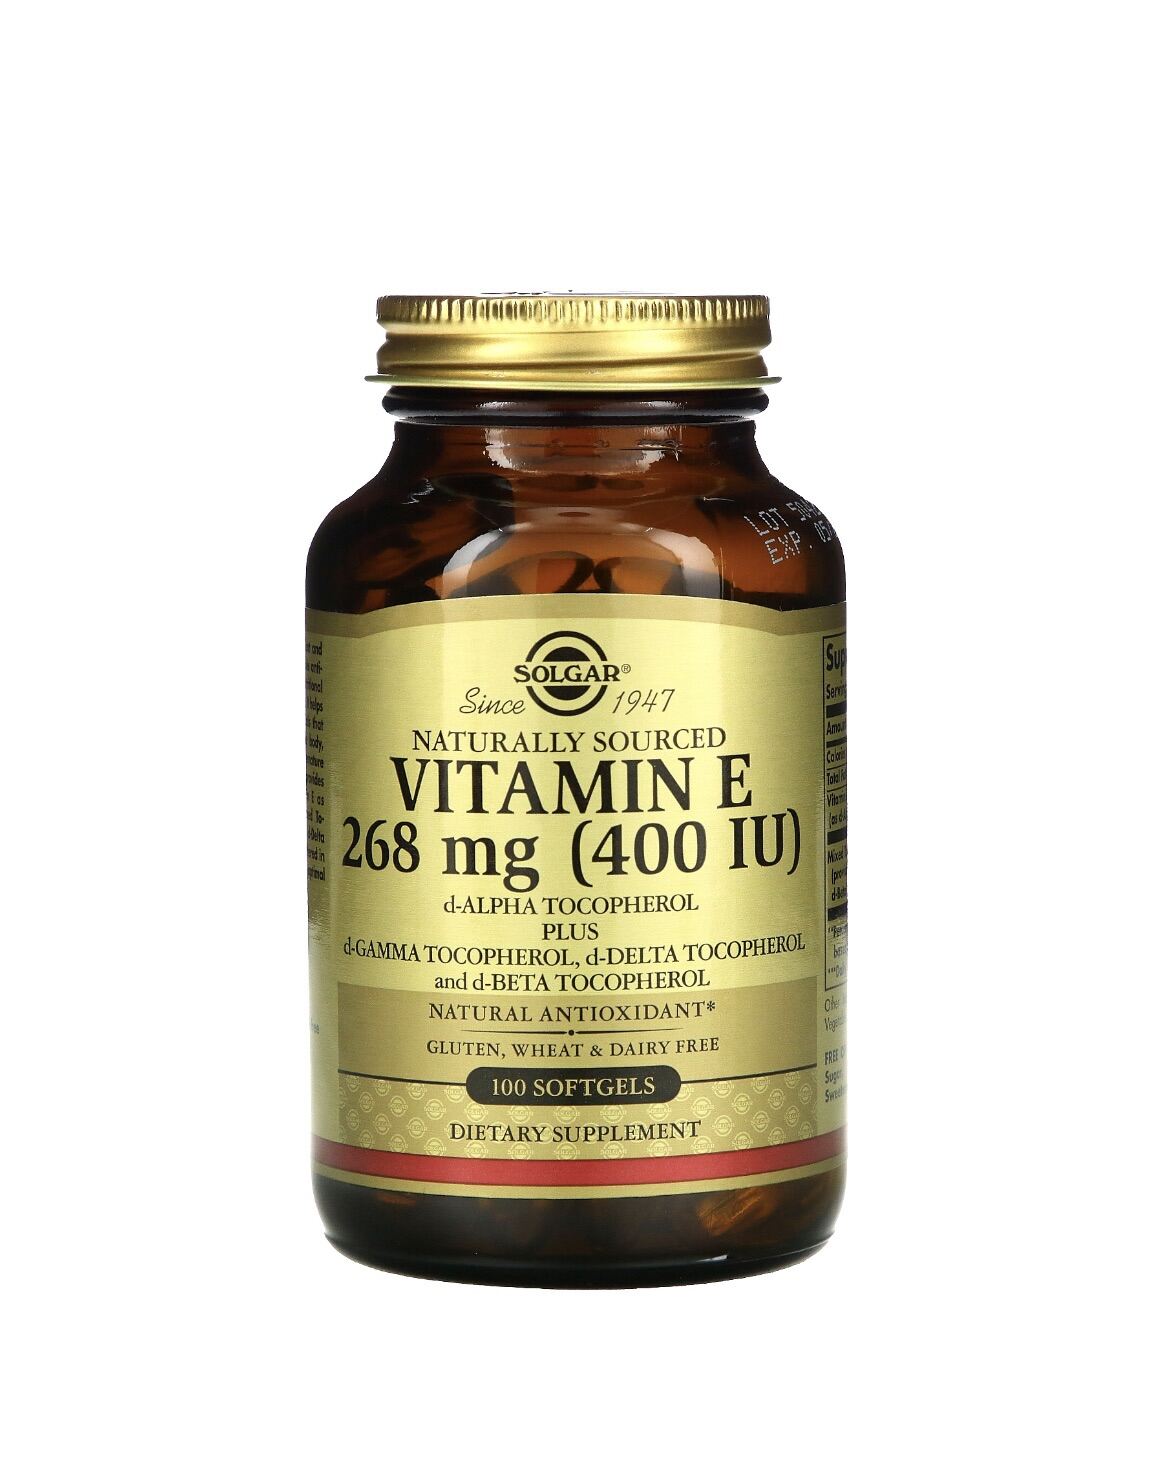 MỸ Solgar Vitamiin E 268mg 400IU 100viiên  May 2024 thumbnail